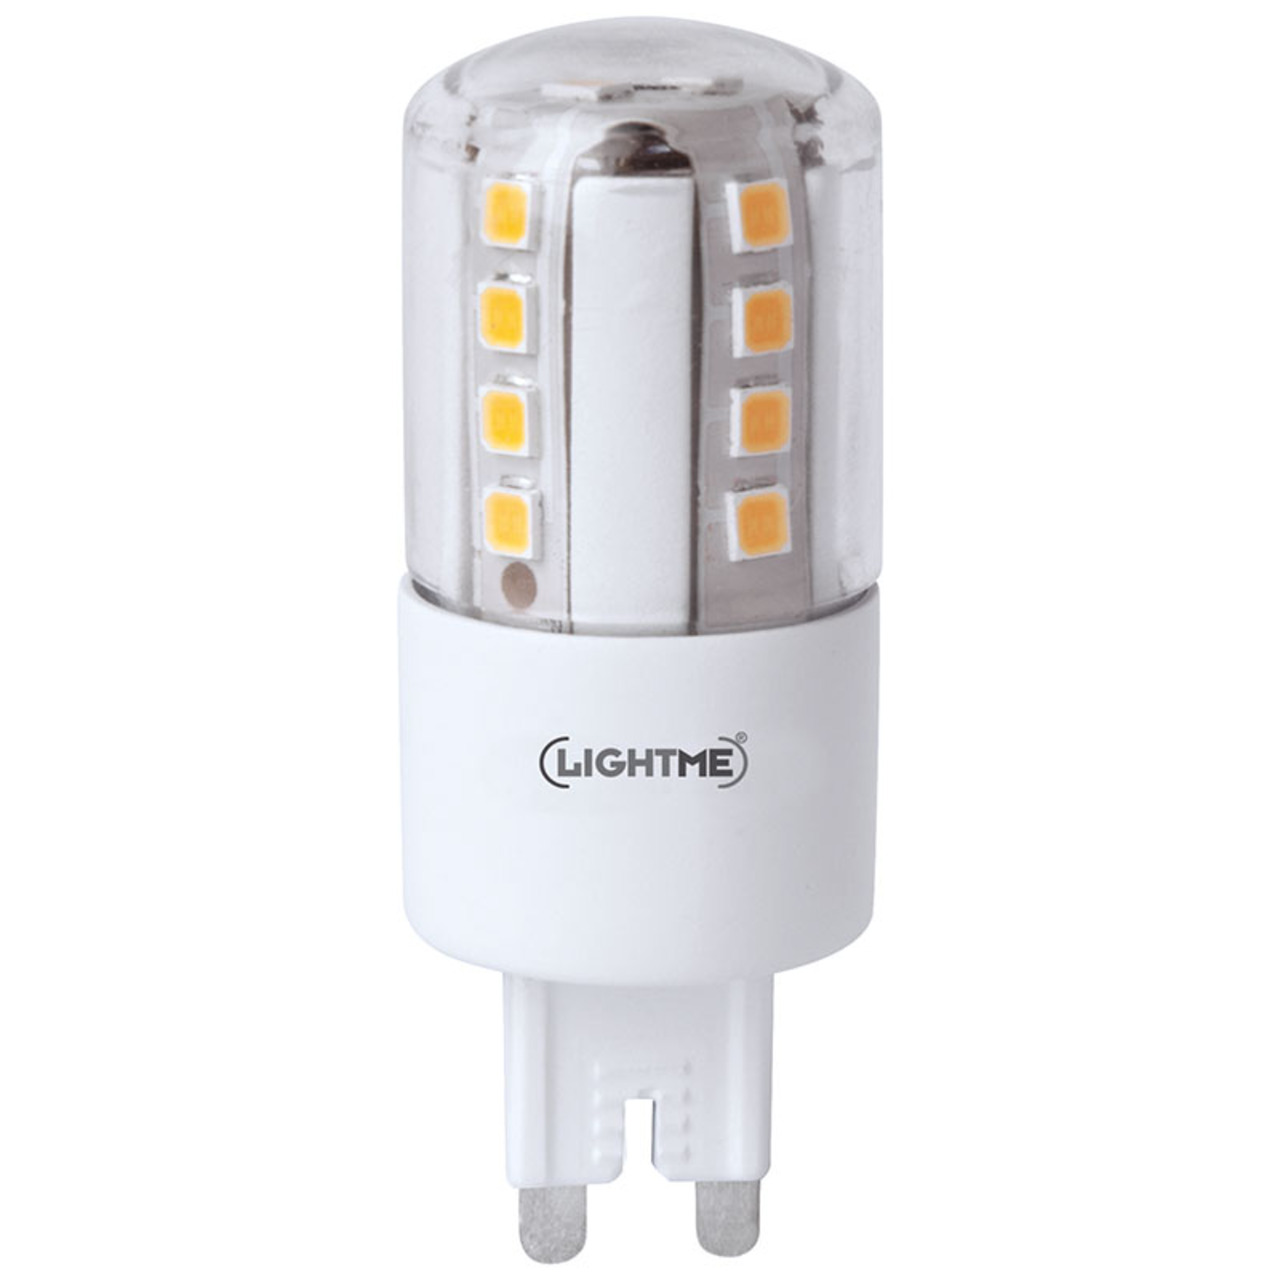 Lightme 4-5-W-G9-LED-Lampe- warmweiss- dimmbar- 510 lm